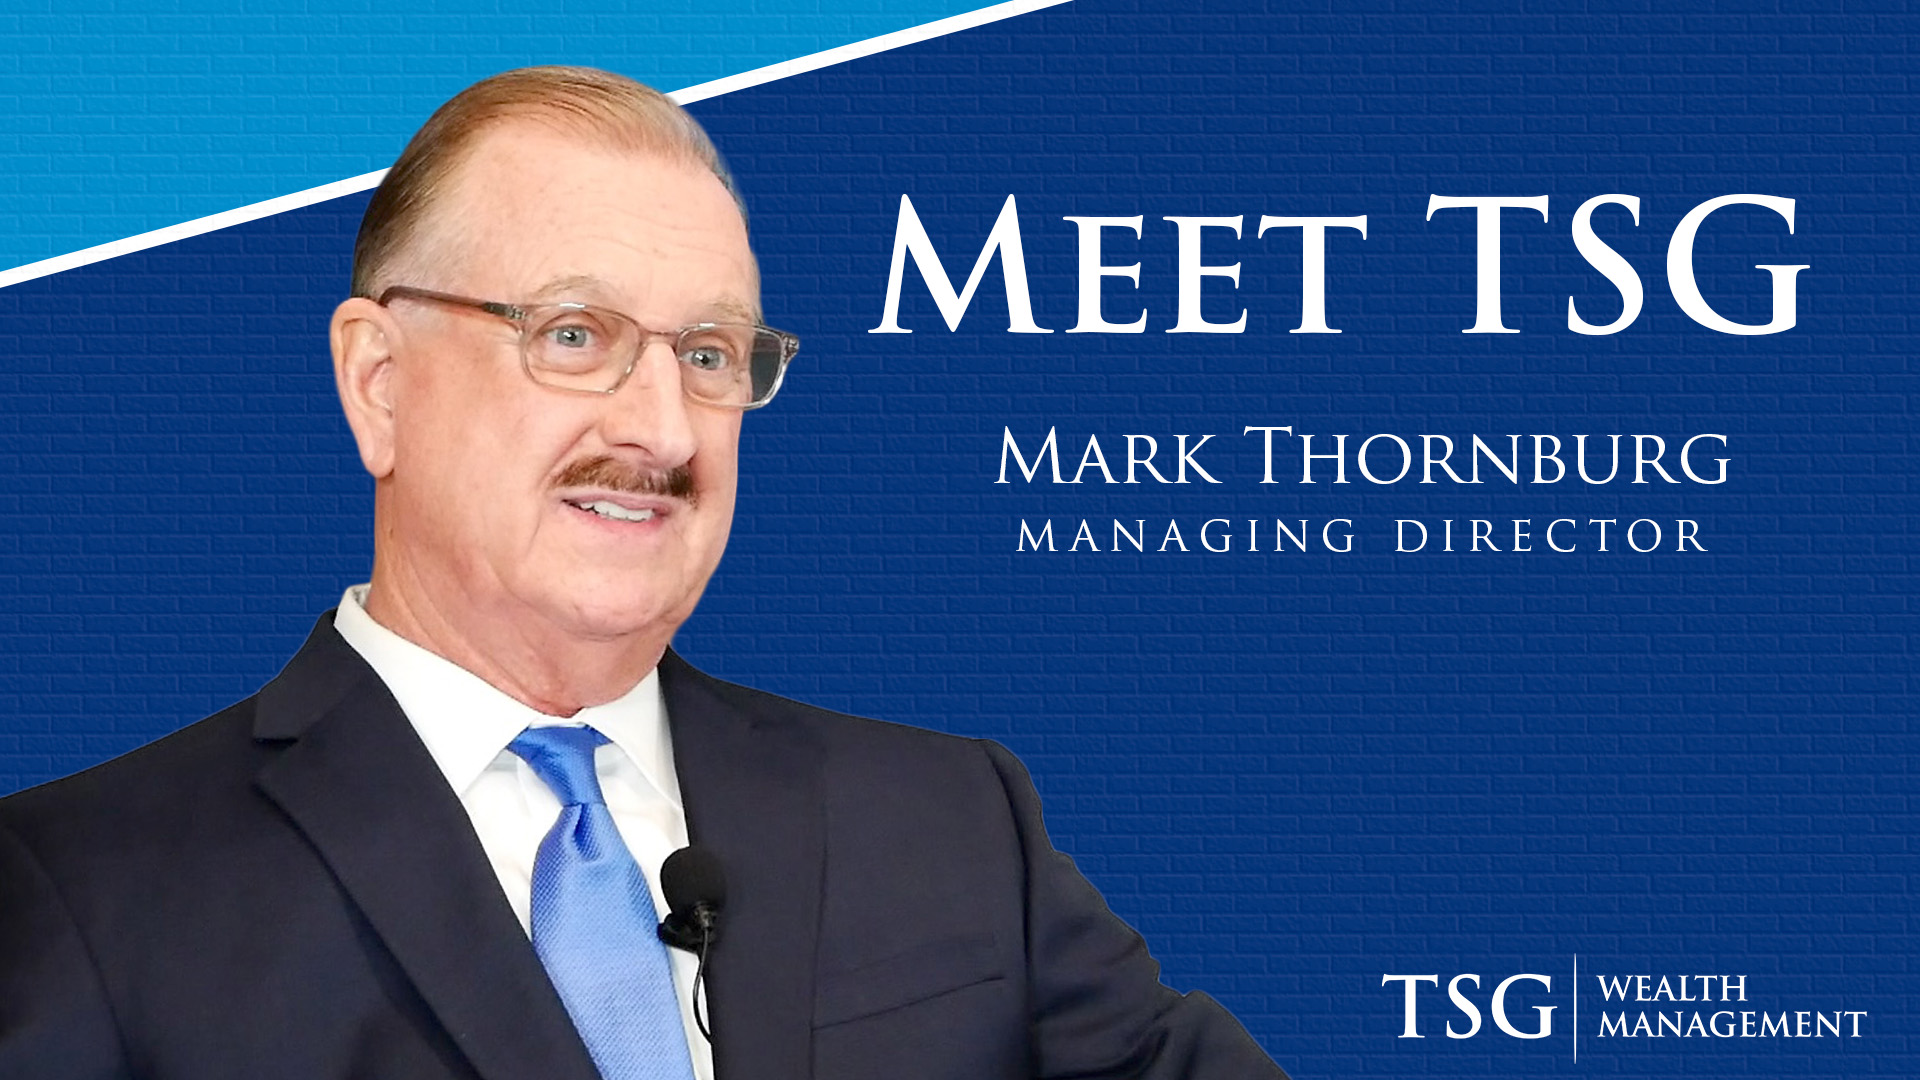 Mark Thornburg | TSG Wealth Management | Meet TSG